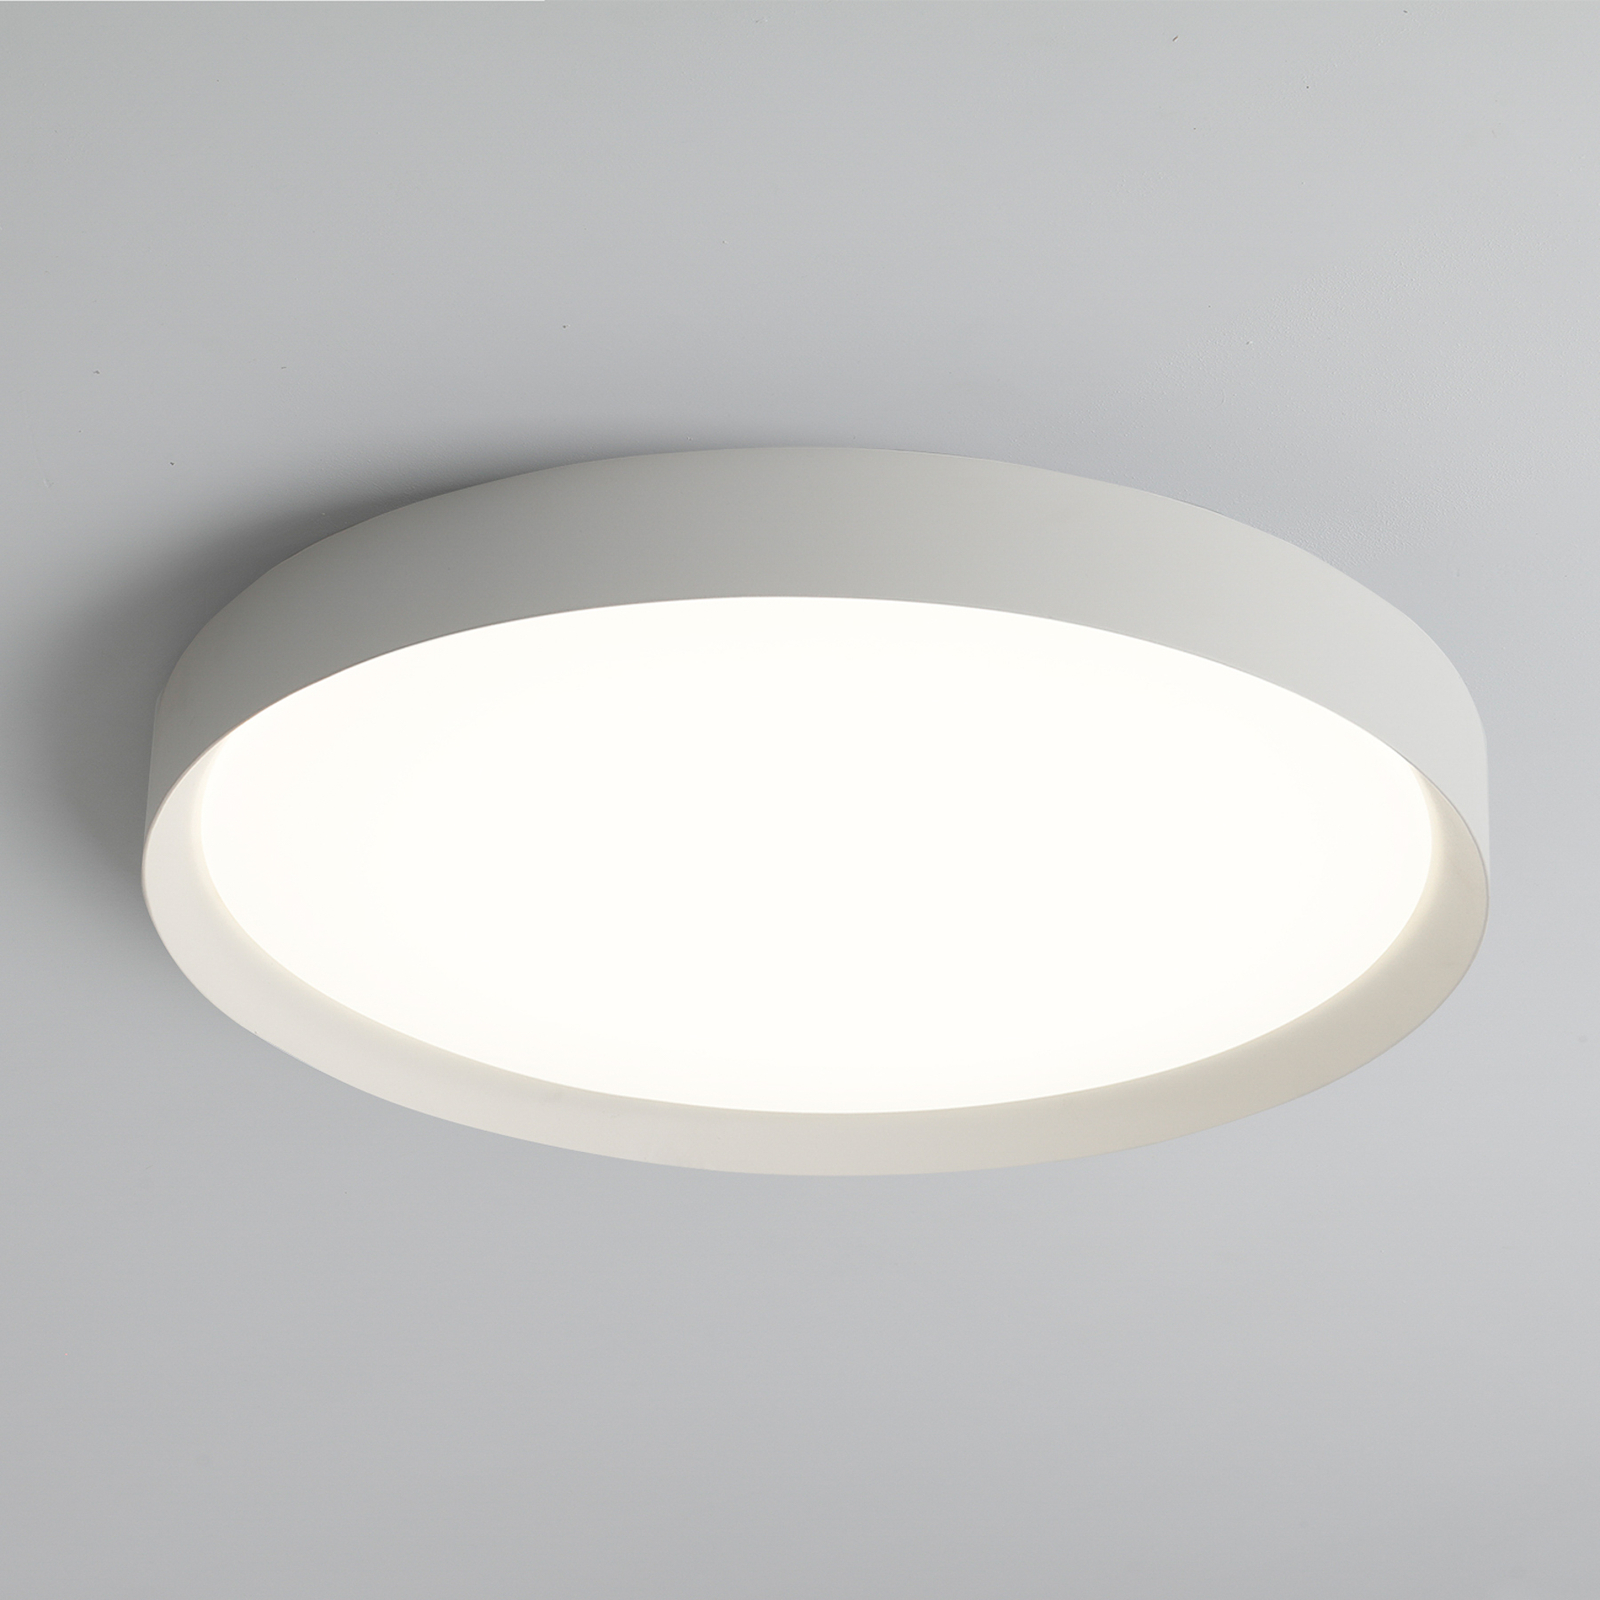 LED-loftslampe Minsk, Ø 60 cm, Casambi, 42 W, hvid